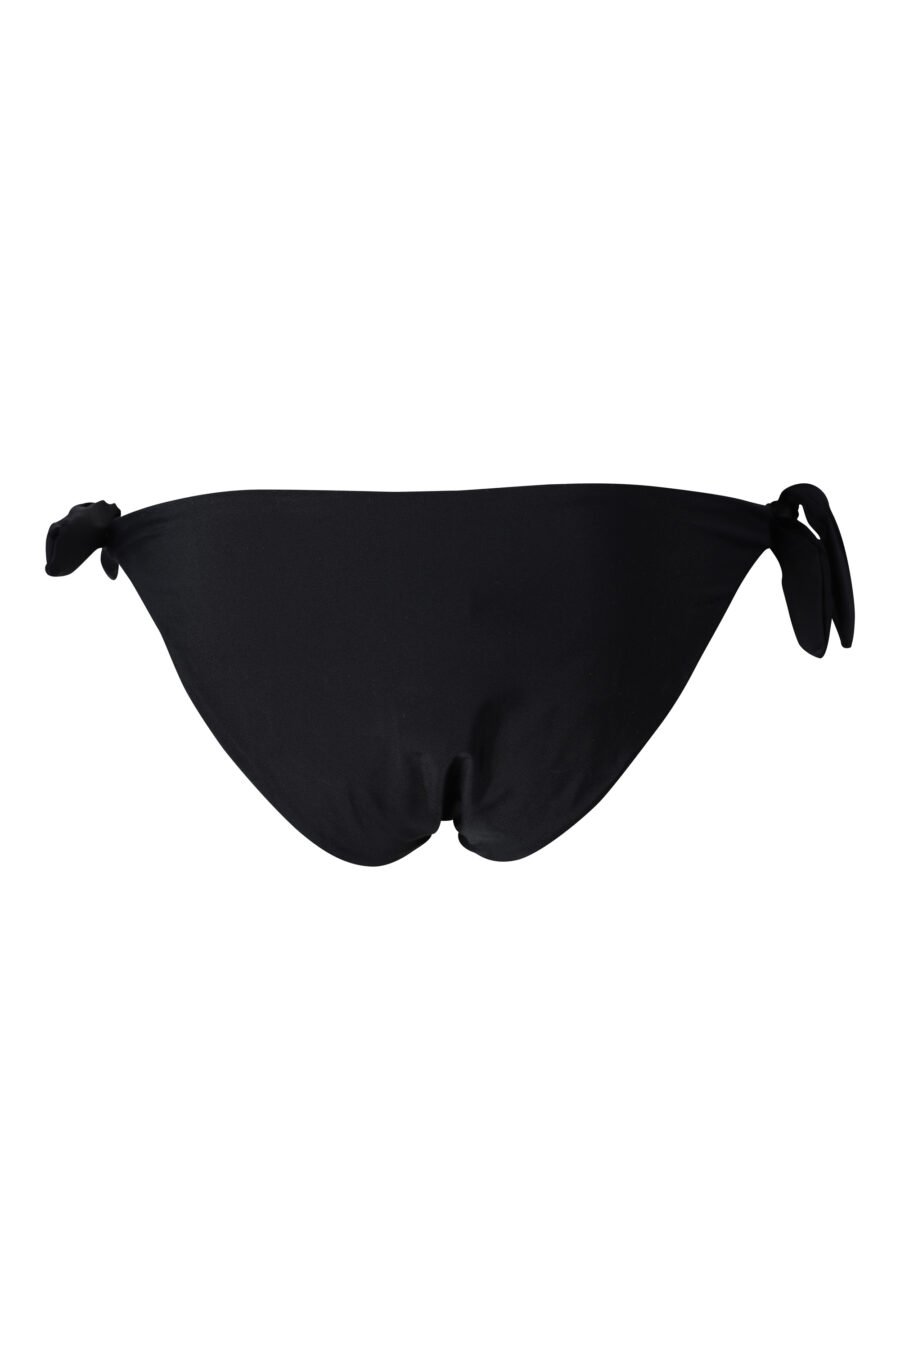 Black bikini bottoms with "animal print" maxi bikini top and side tie - IMG 2312